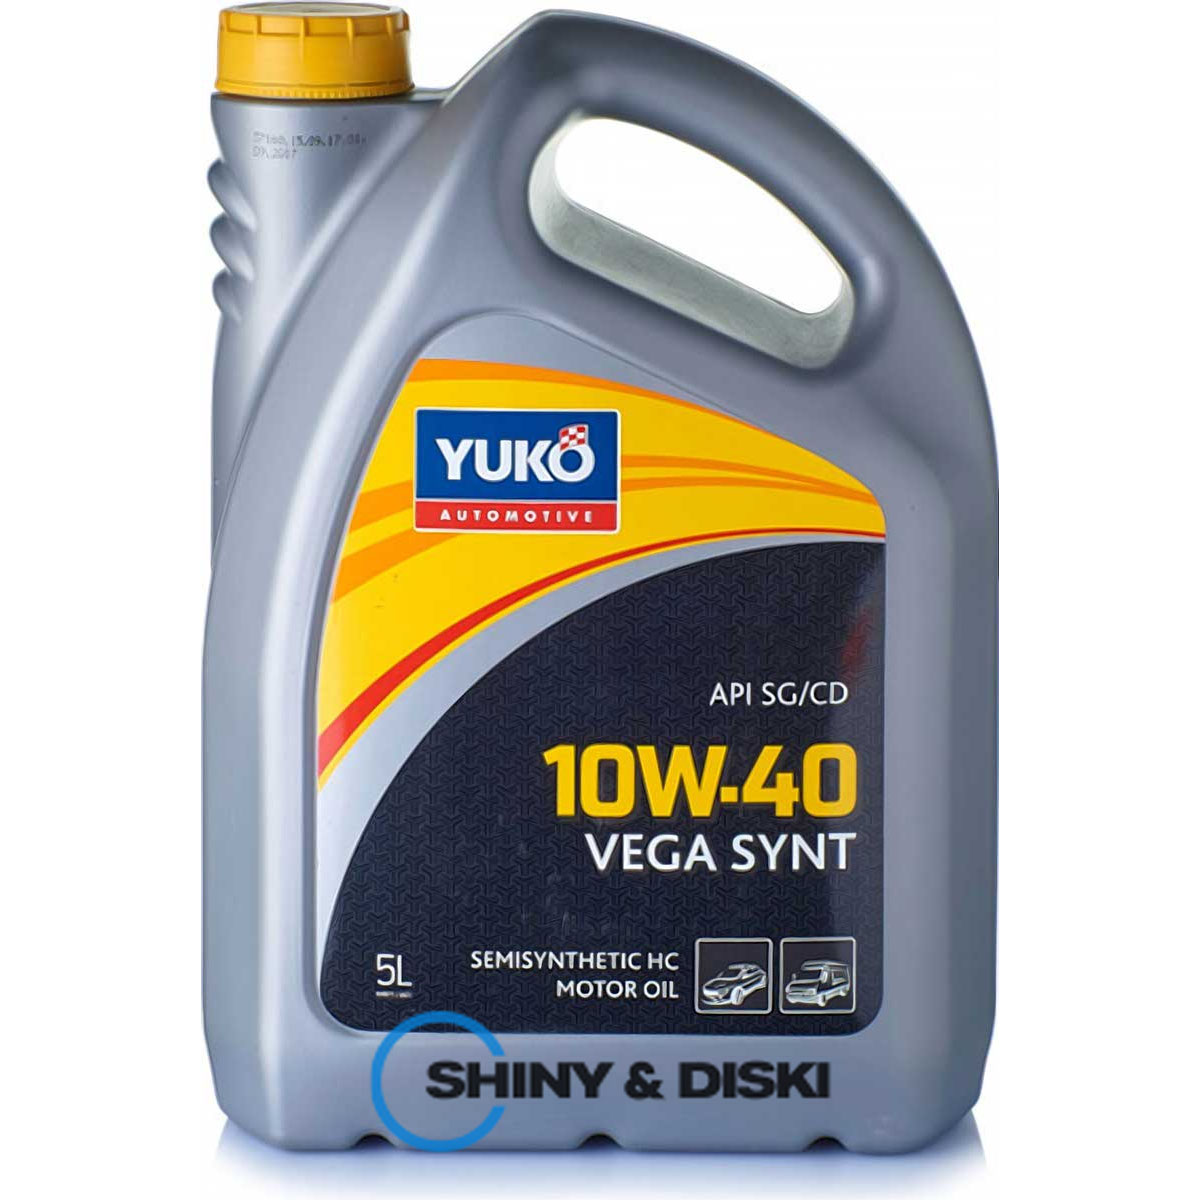 yuko vega synt 10w-40 (5л)